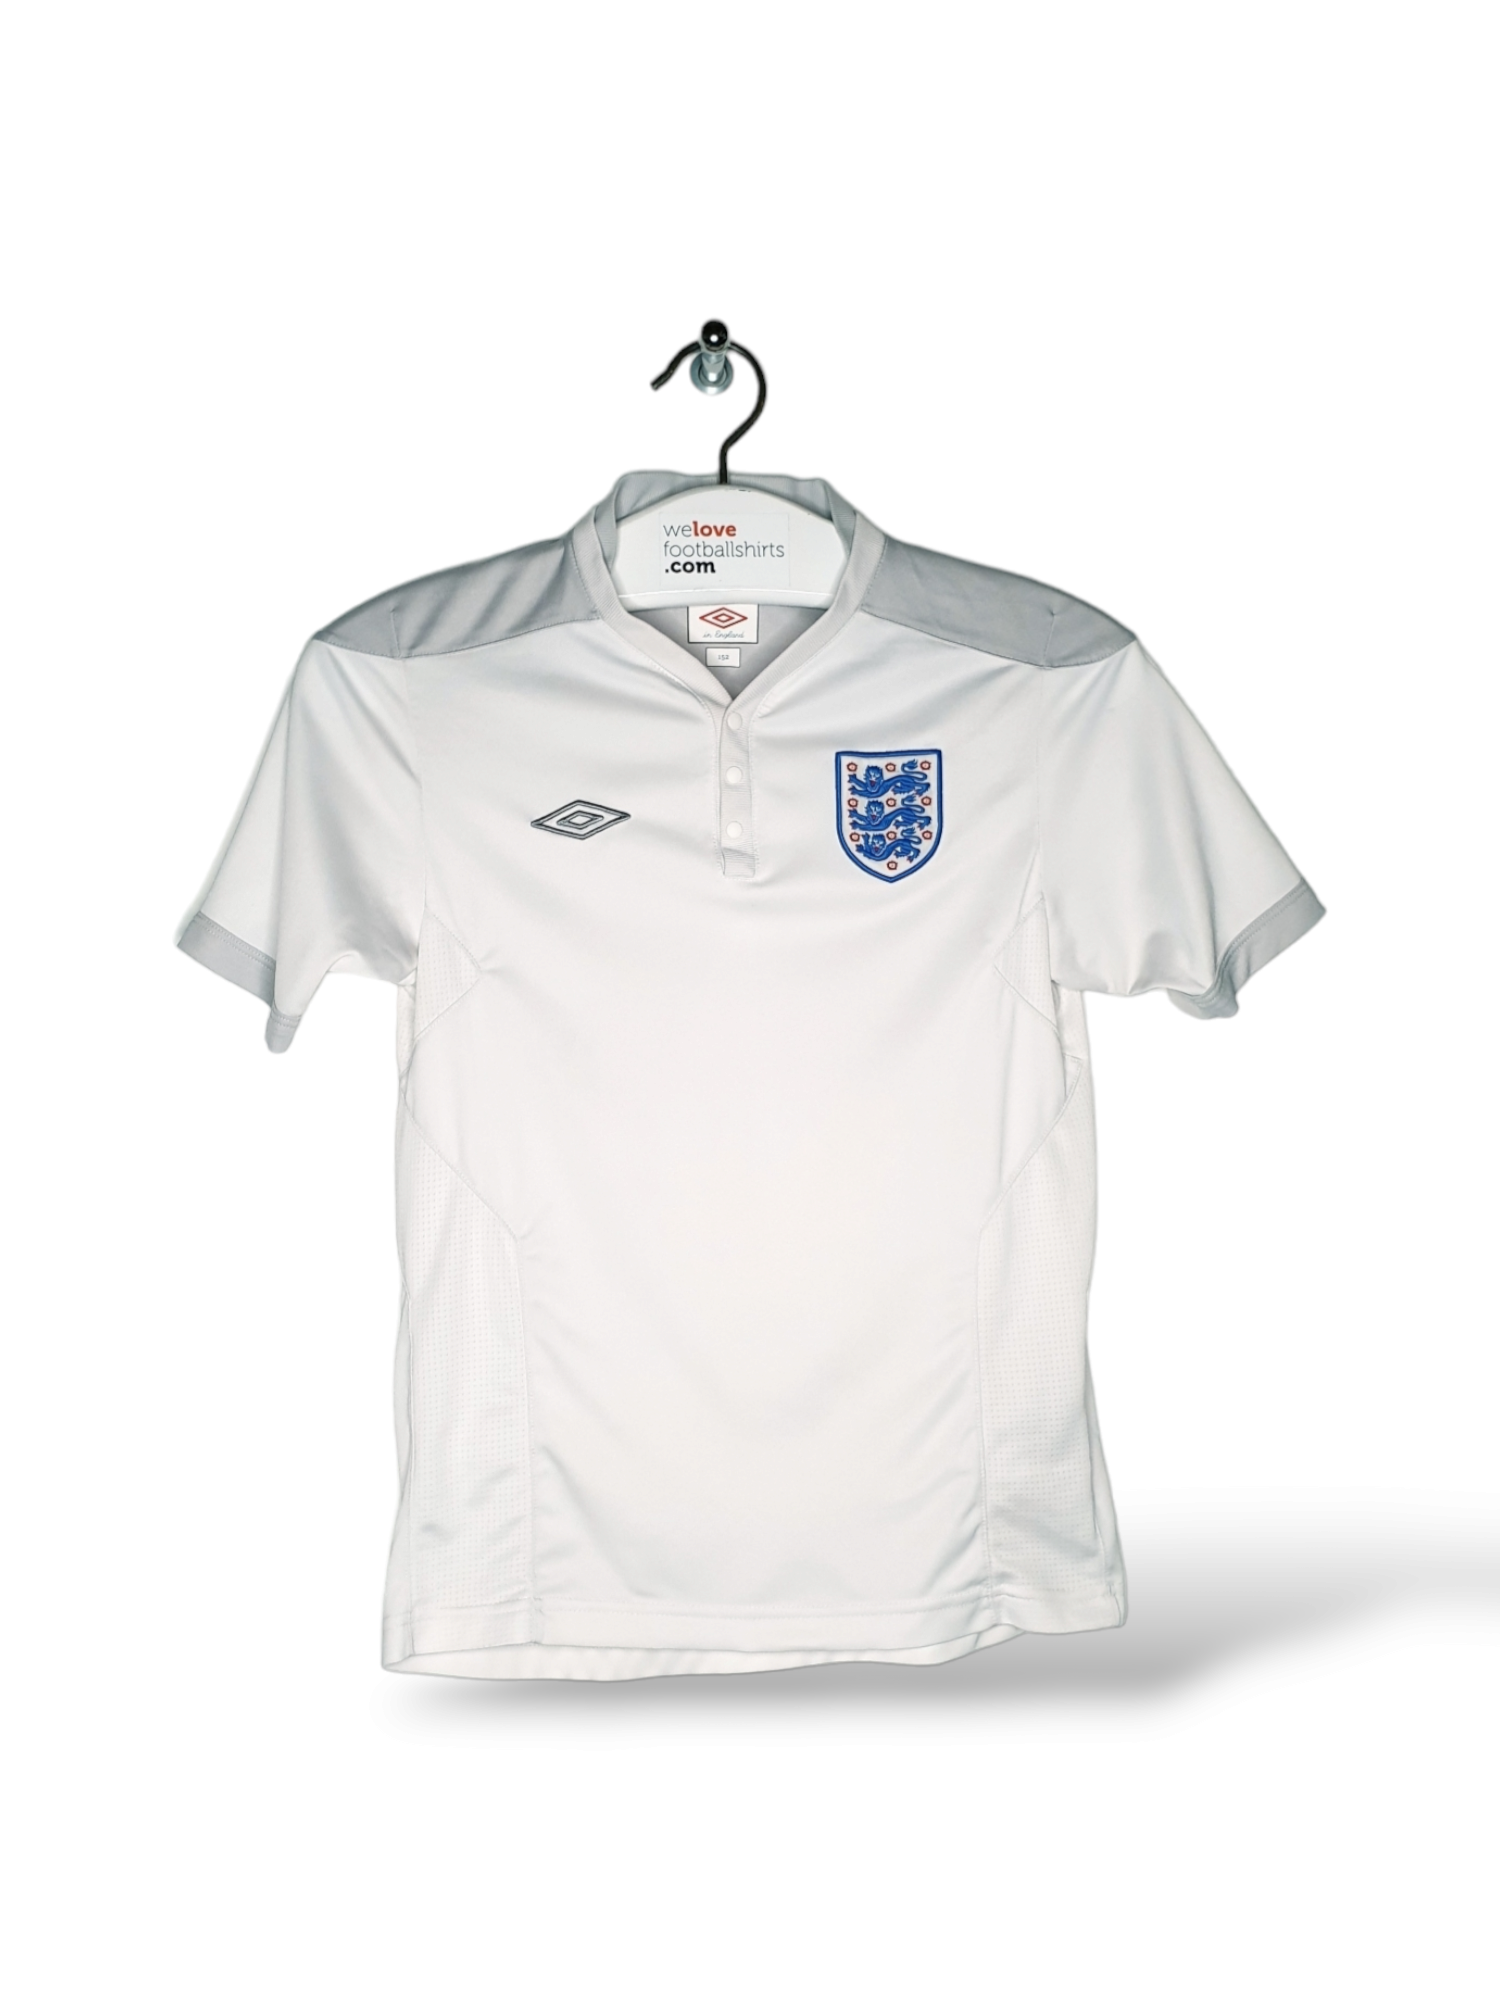 Umbro football shirt England